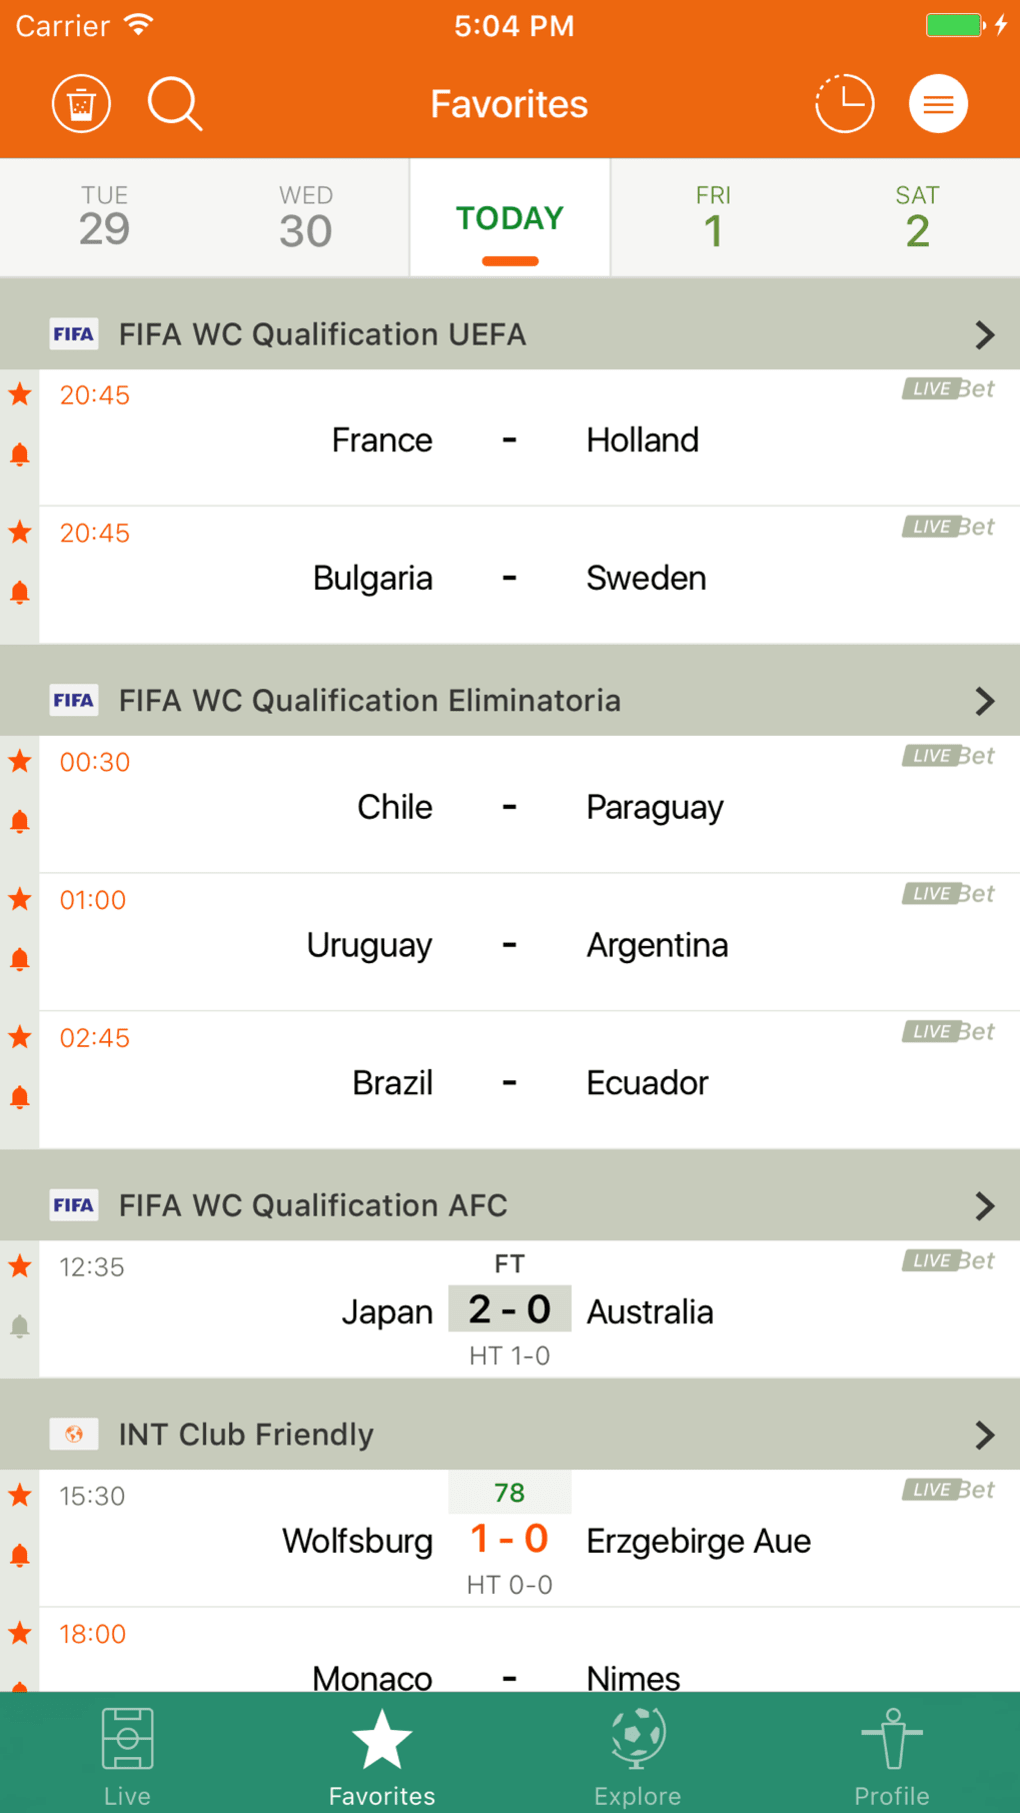 Futbol24 soccer livescore app for iPhone